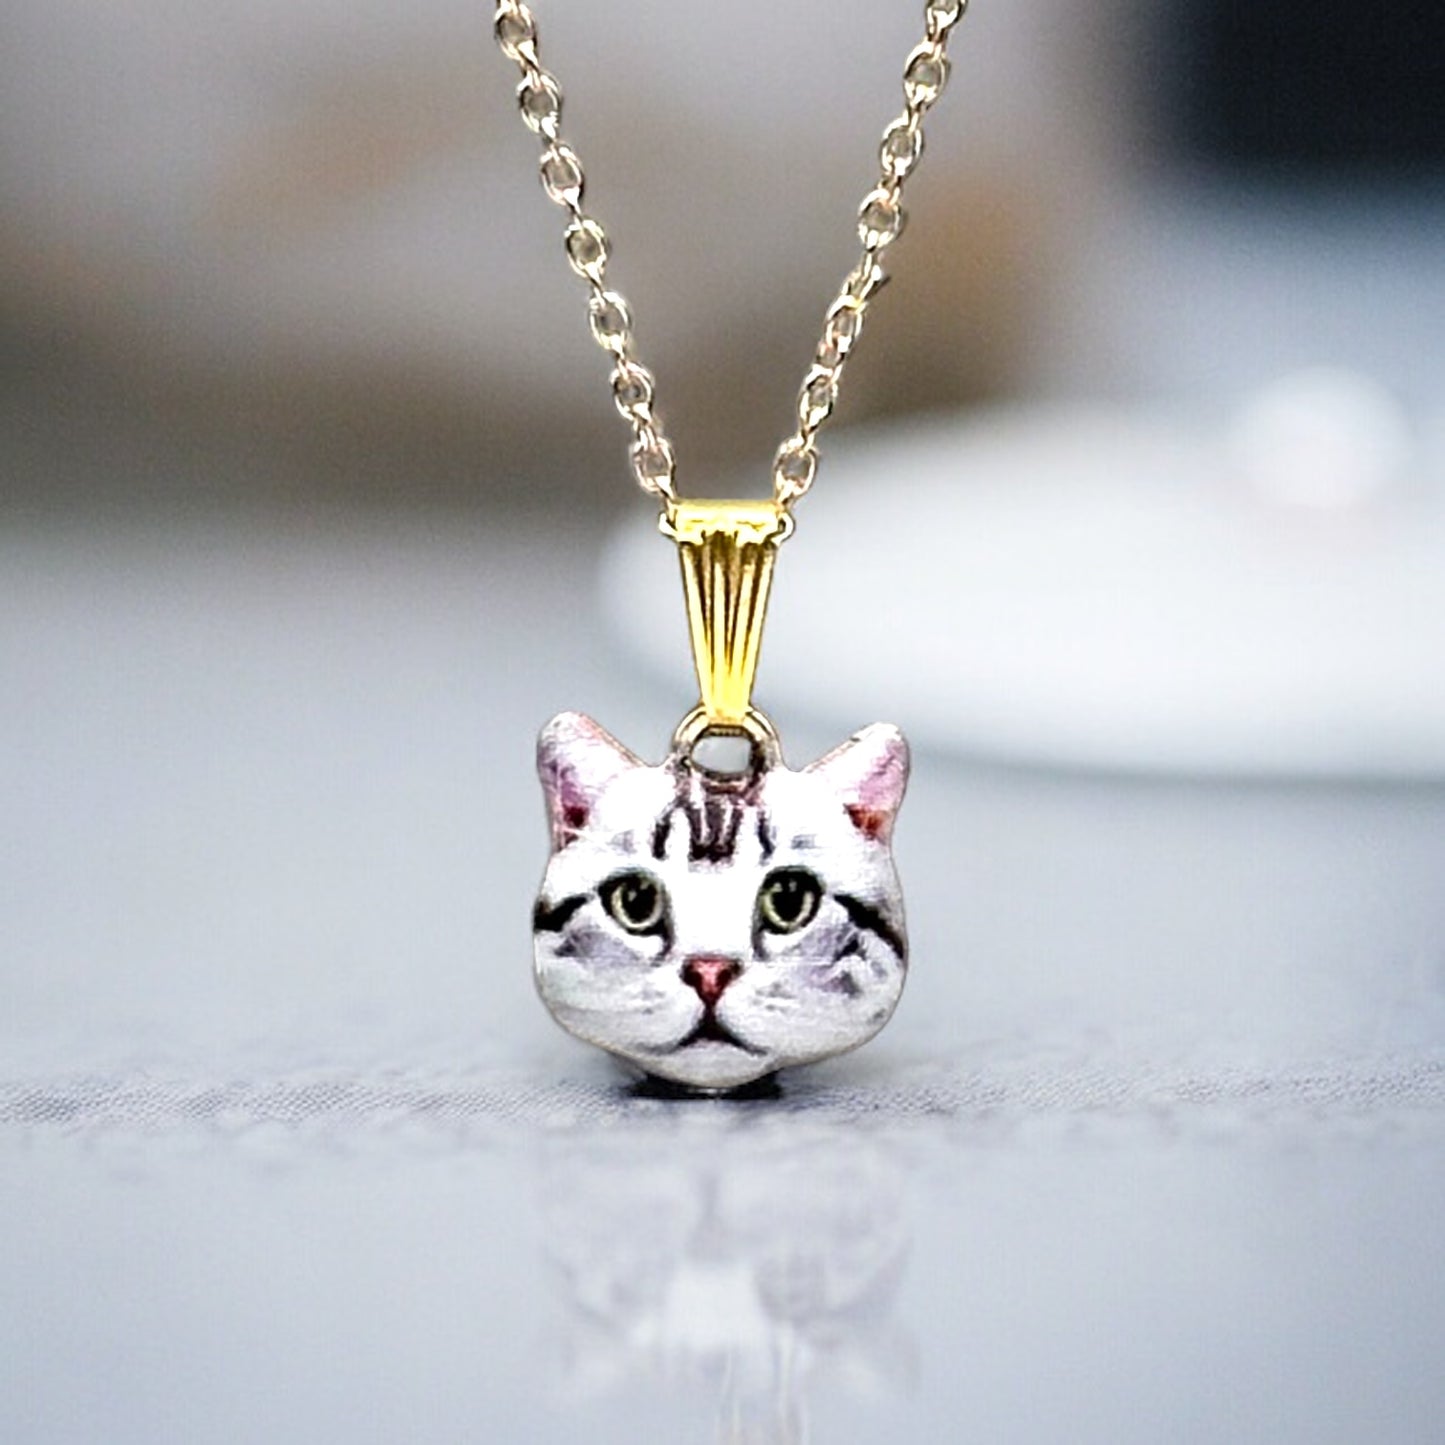 Cat Face Charm Necklace